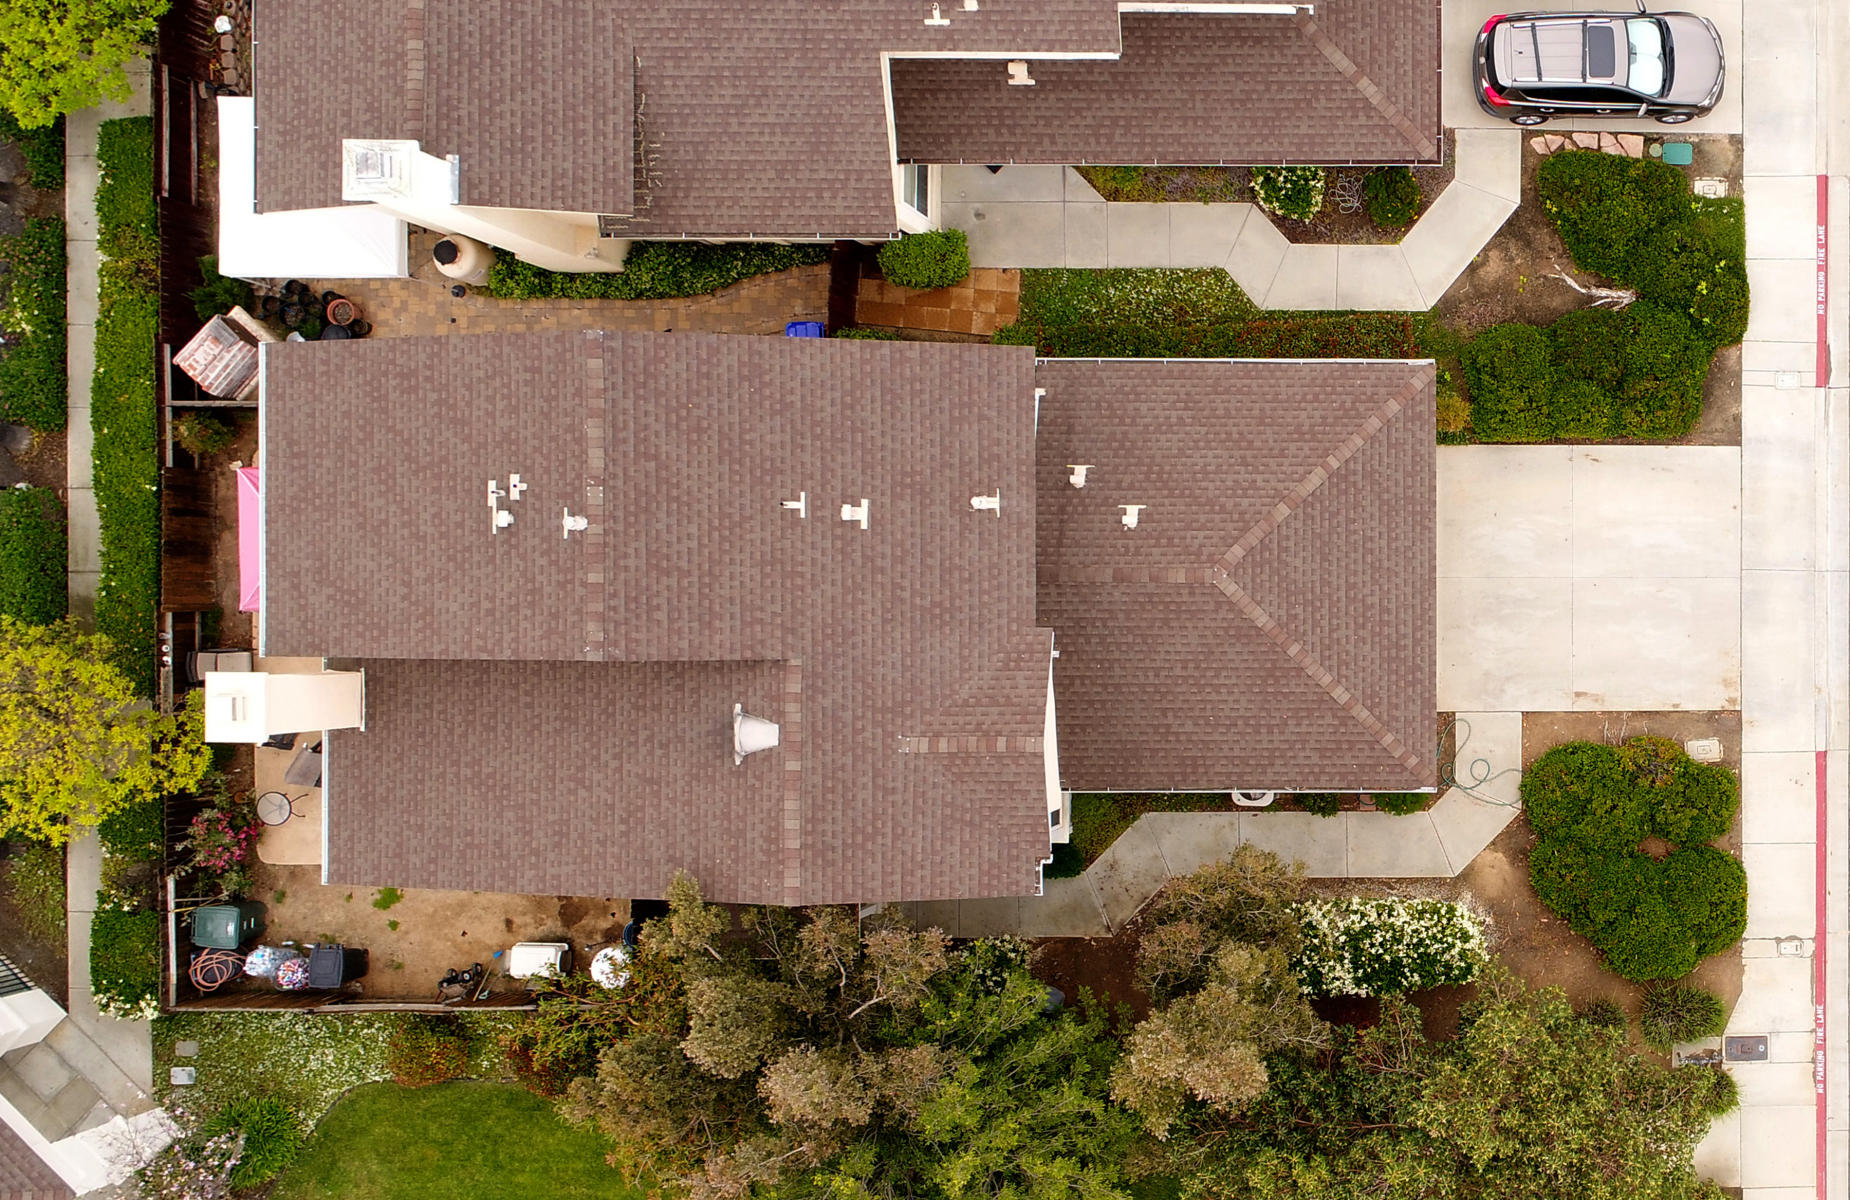 Ramona, CA subdivision roof inspection